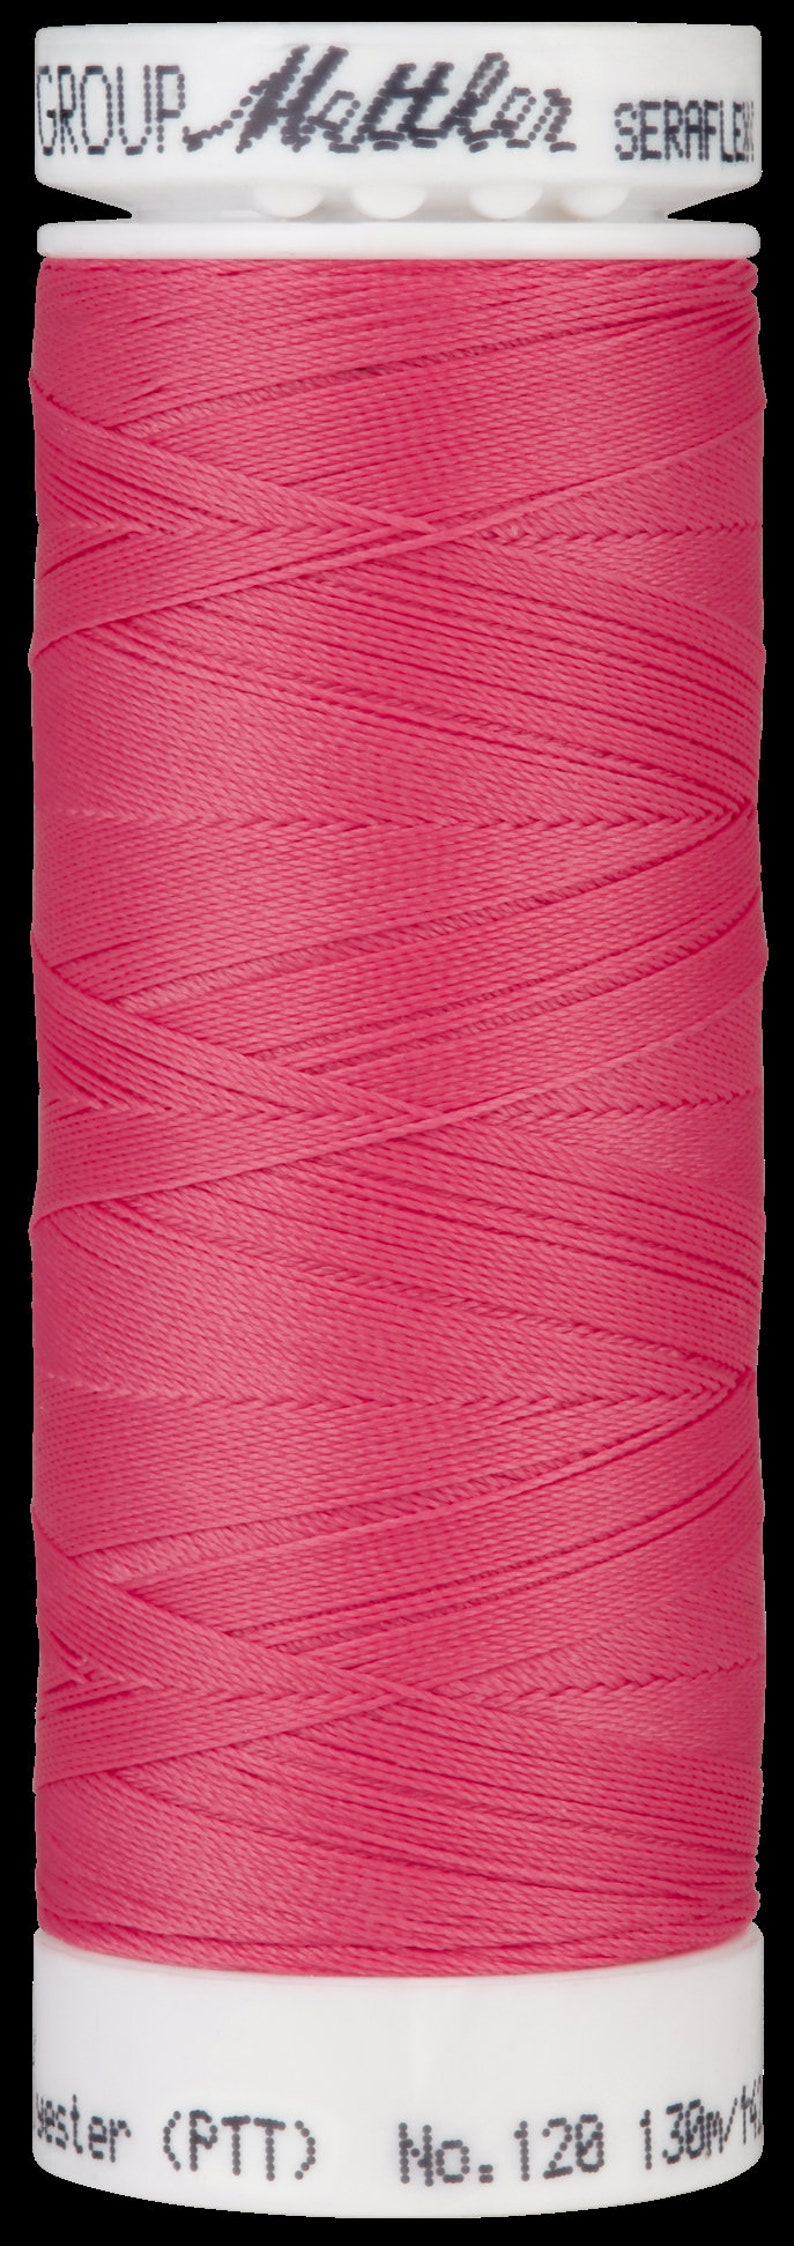 NEUE Farben Seraflex 120 flexibler Faden Nähfaden pink rosa blau Mettler garden rose